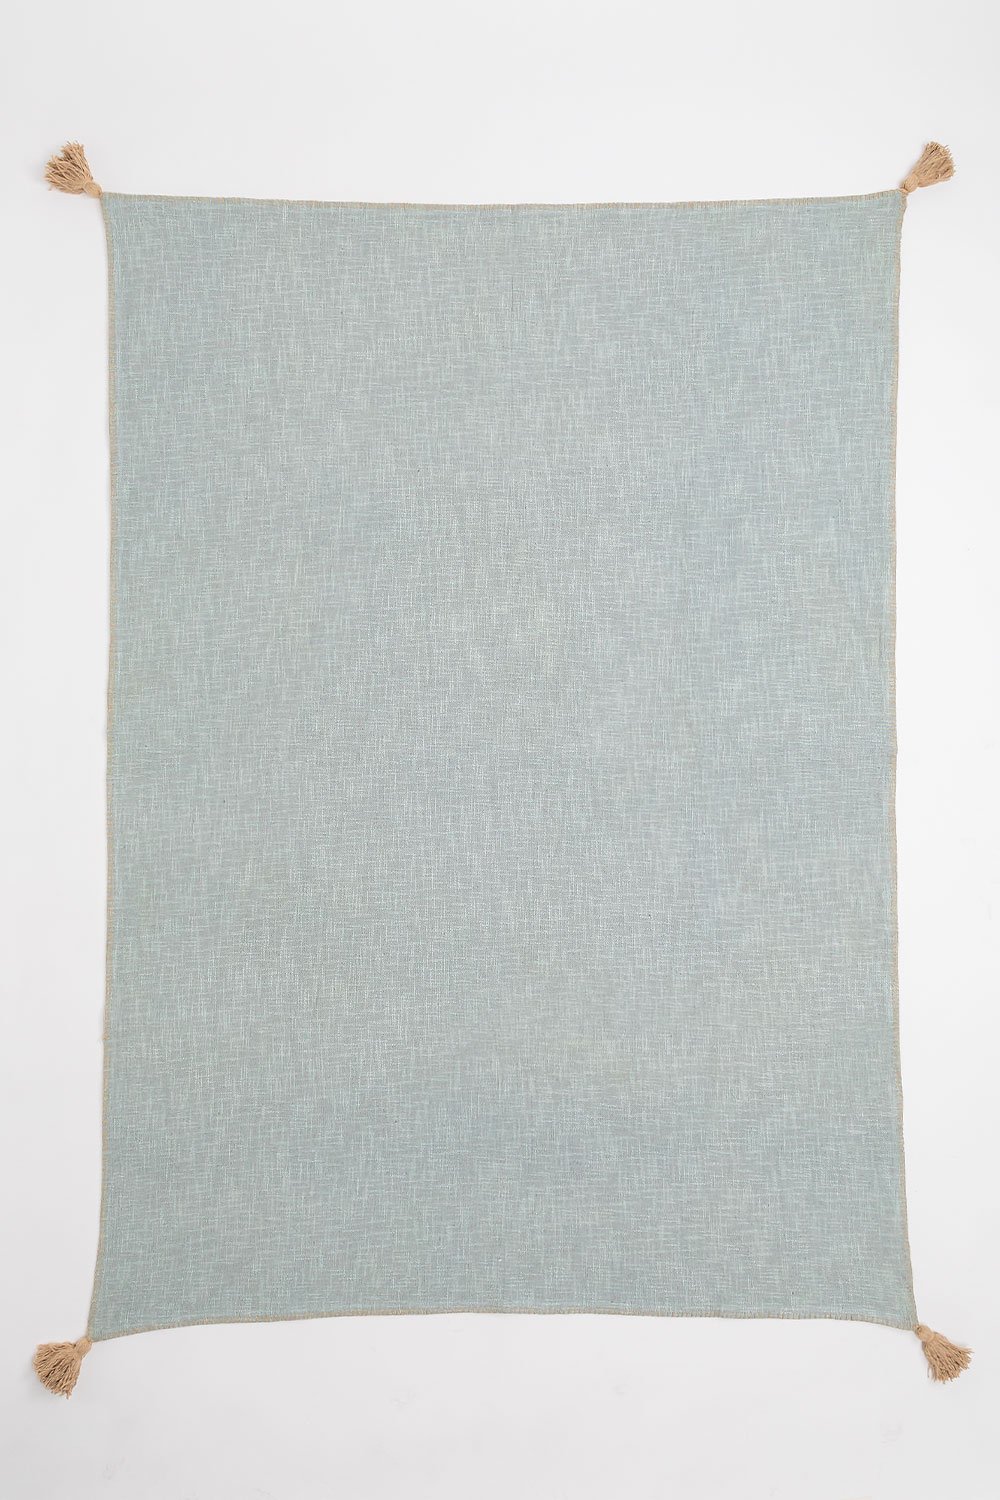 Cotton  Plaid Blanket Paraiba, gallery image 1